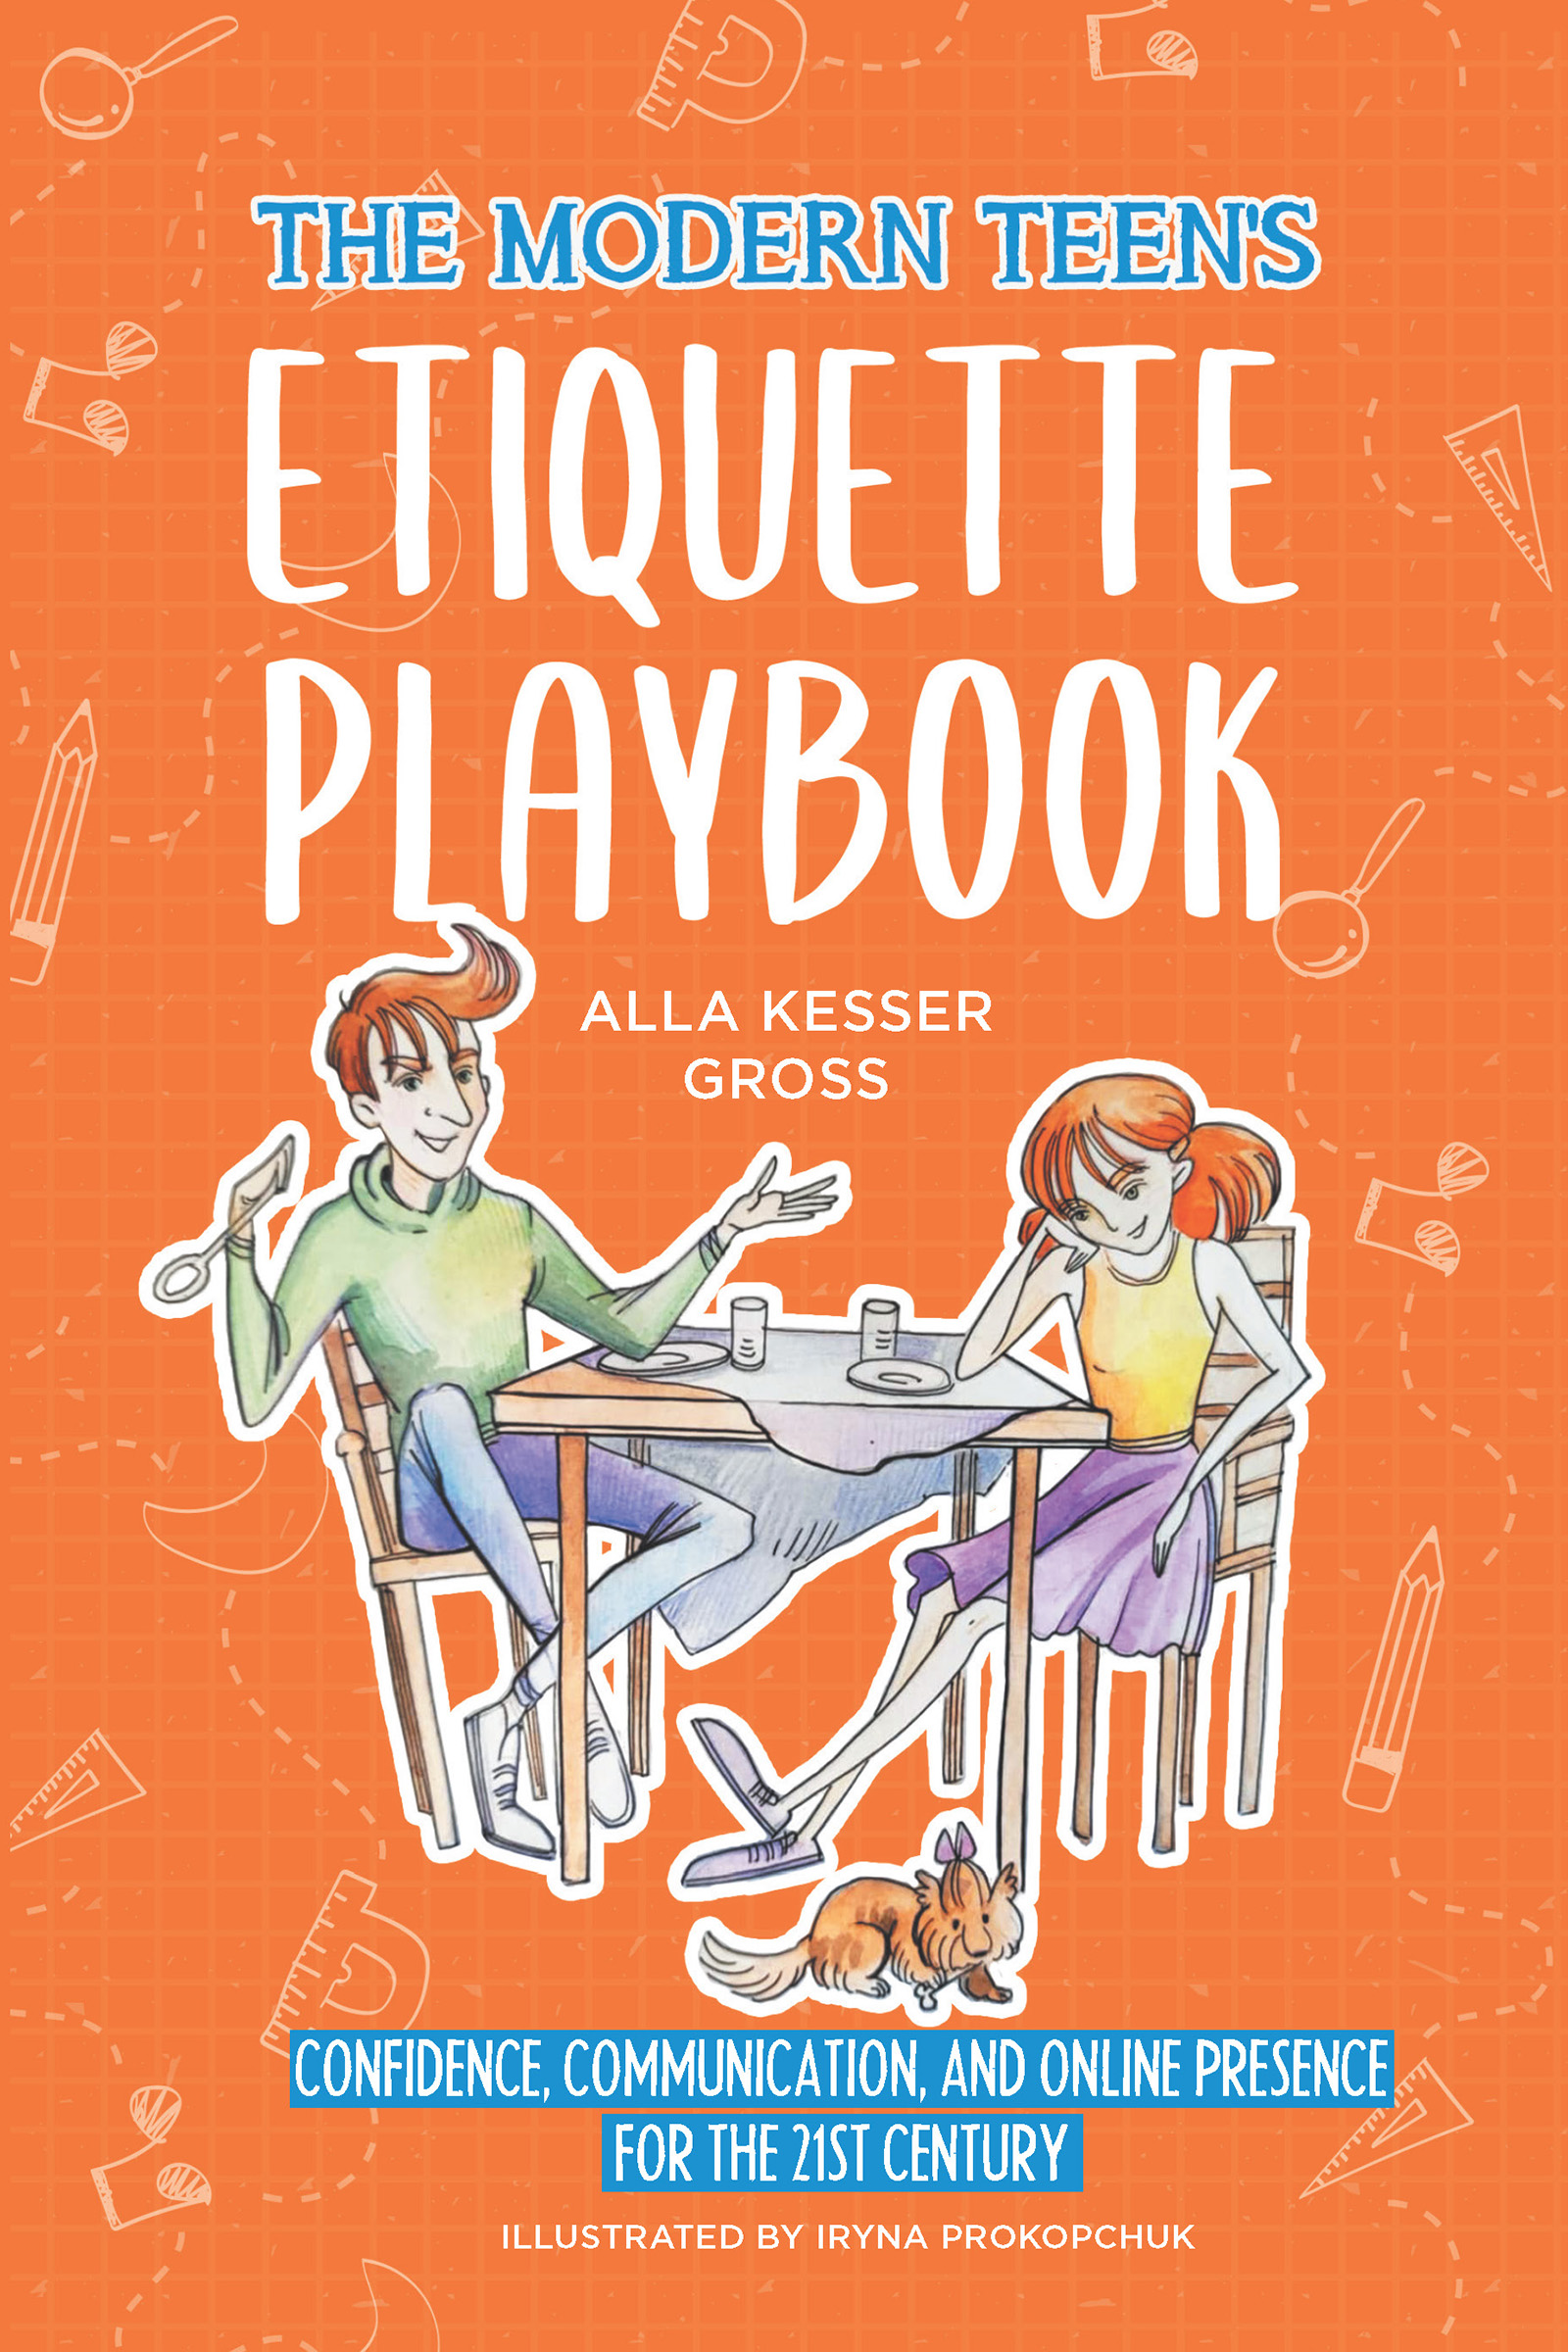 Achieving Bestseller Glory: "The Modern Teen’s Etiquette Playbook' Sets a New Standard for Teen Self-Help Books"